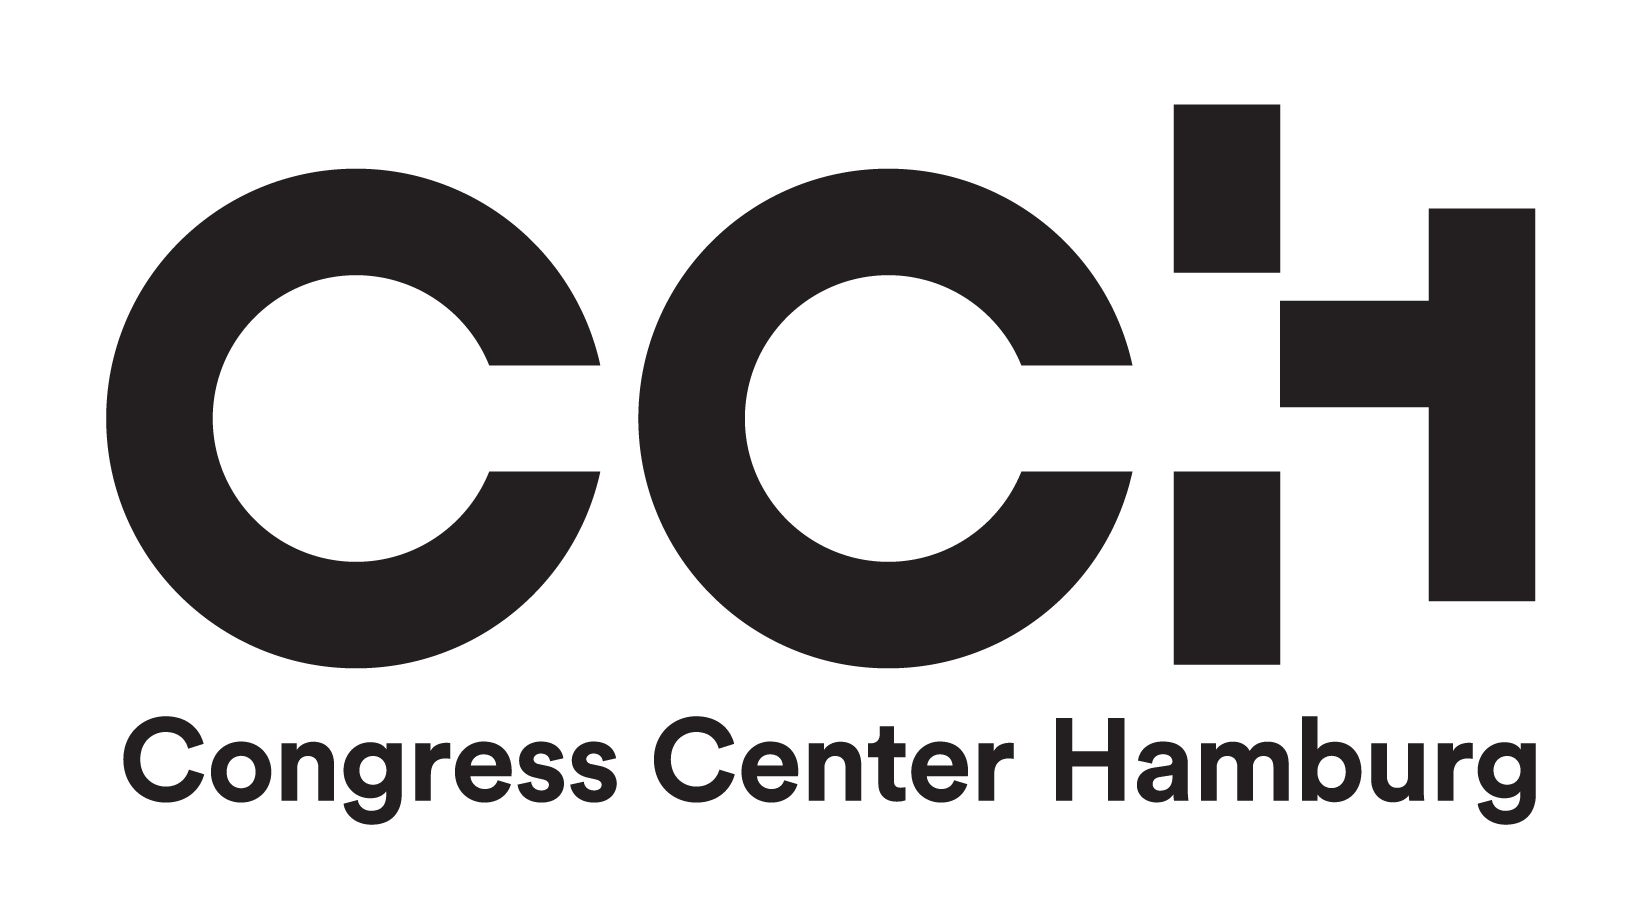 Congress Center Hamburg (CCH), Germany